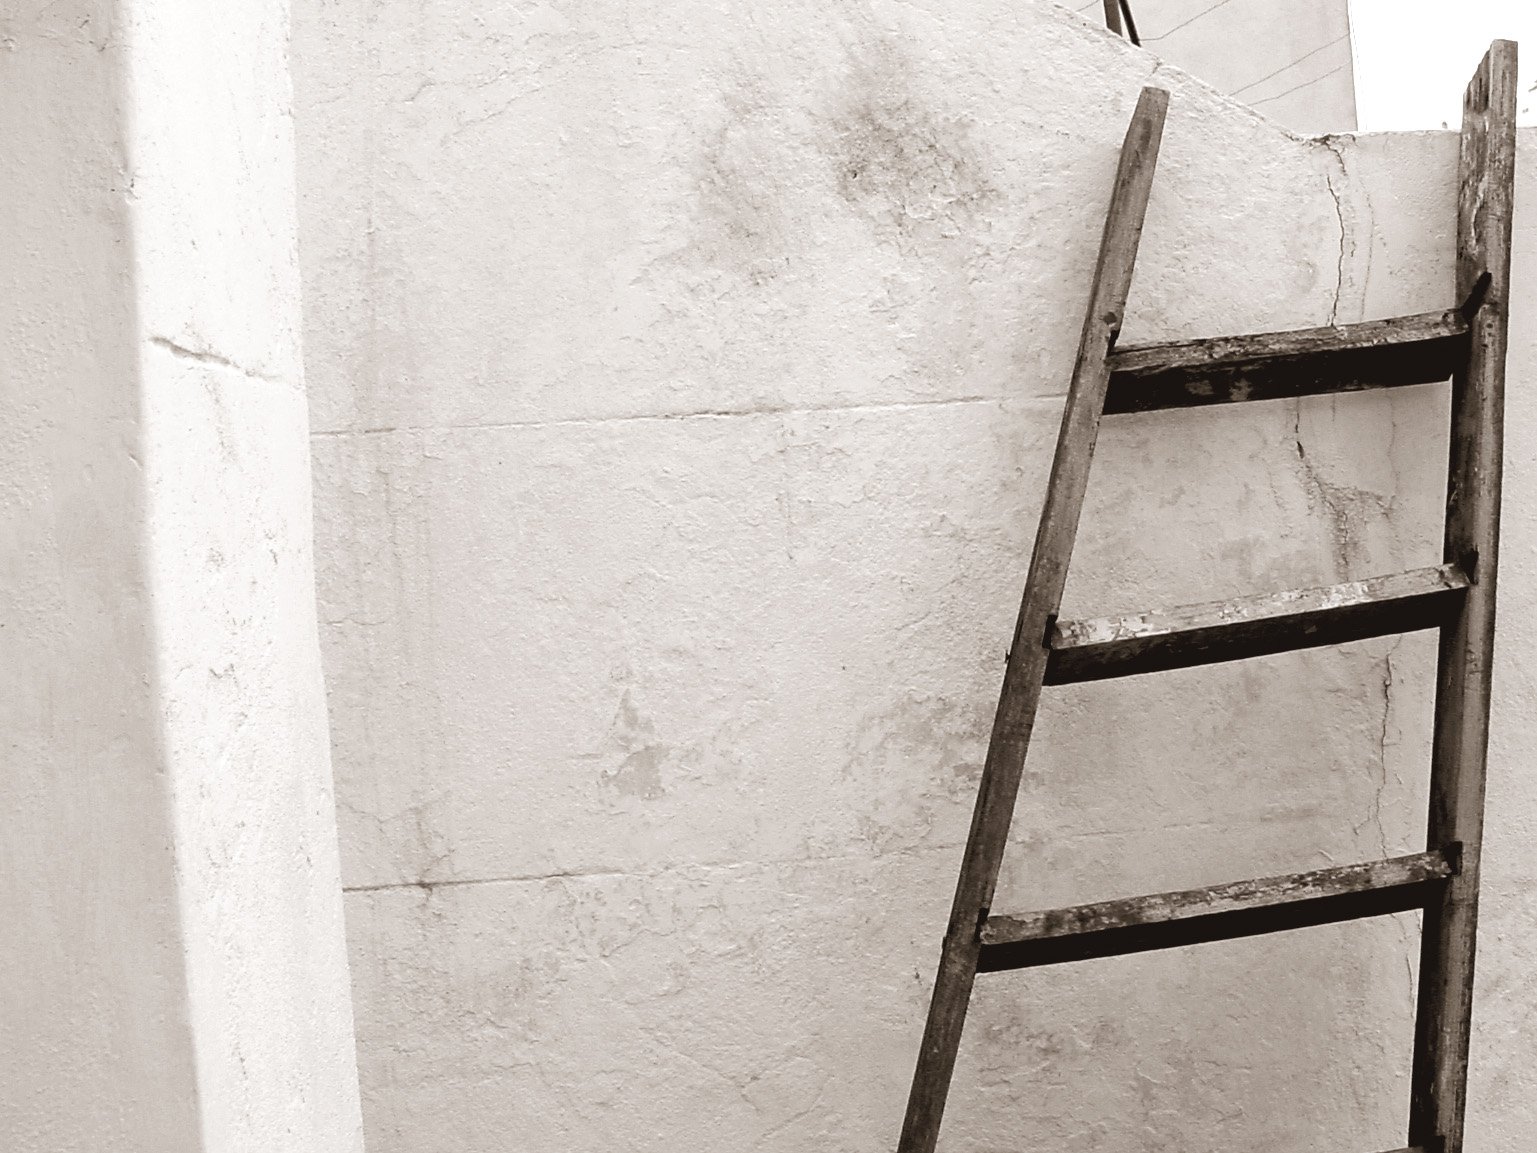 a ladder leaning against a wall as a bird flies overhead